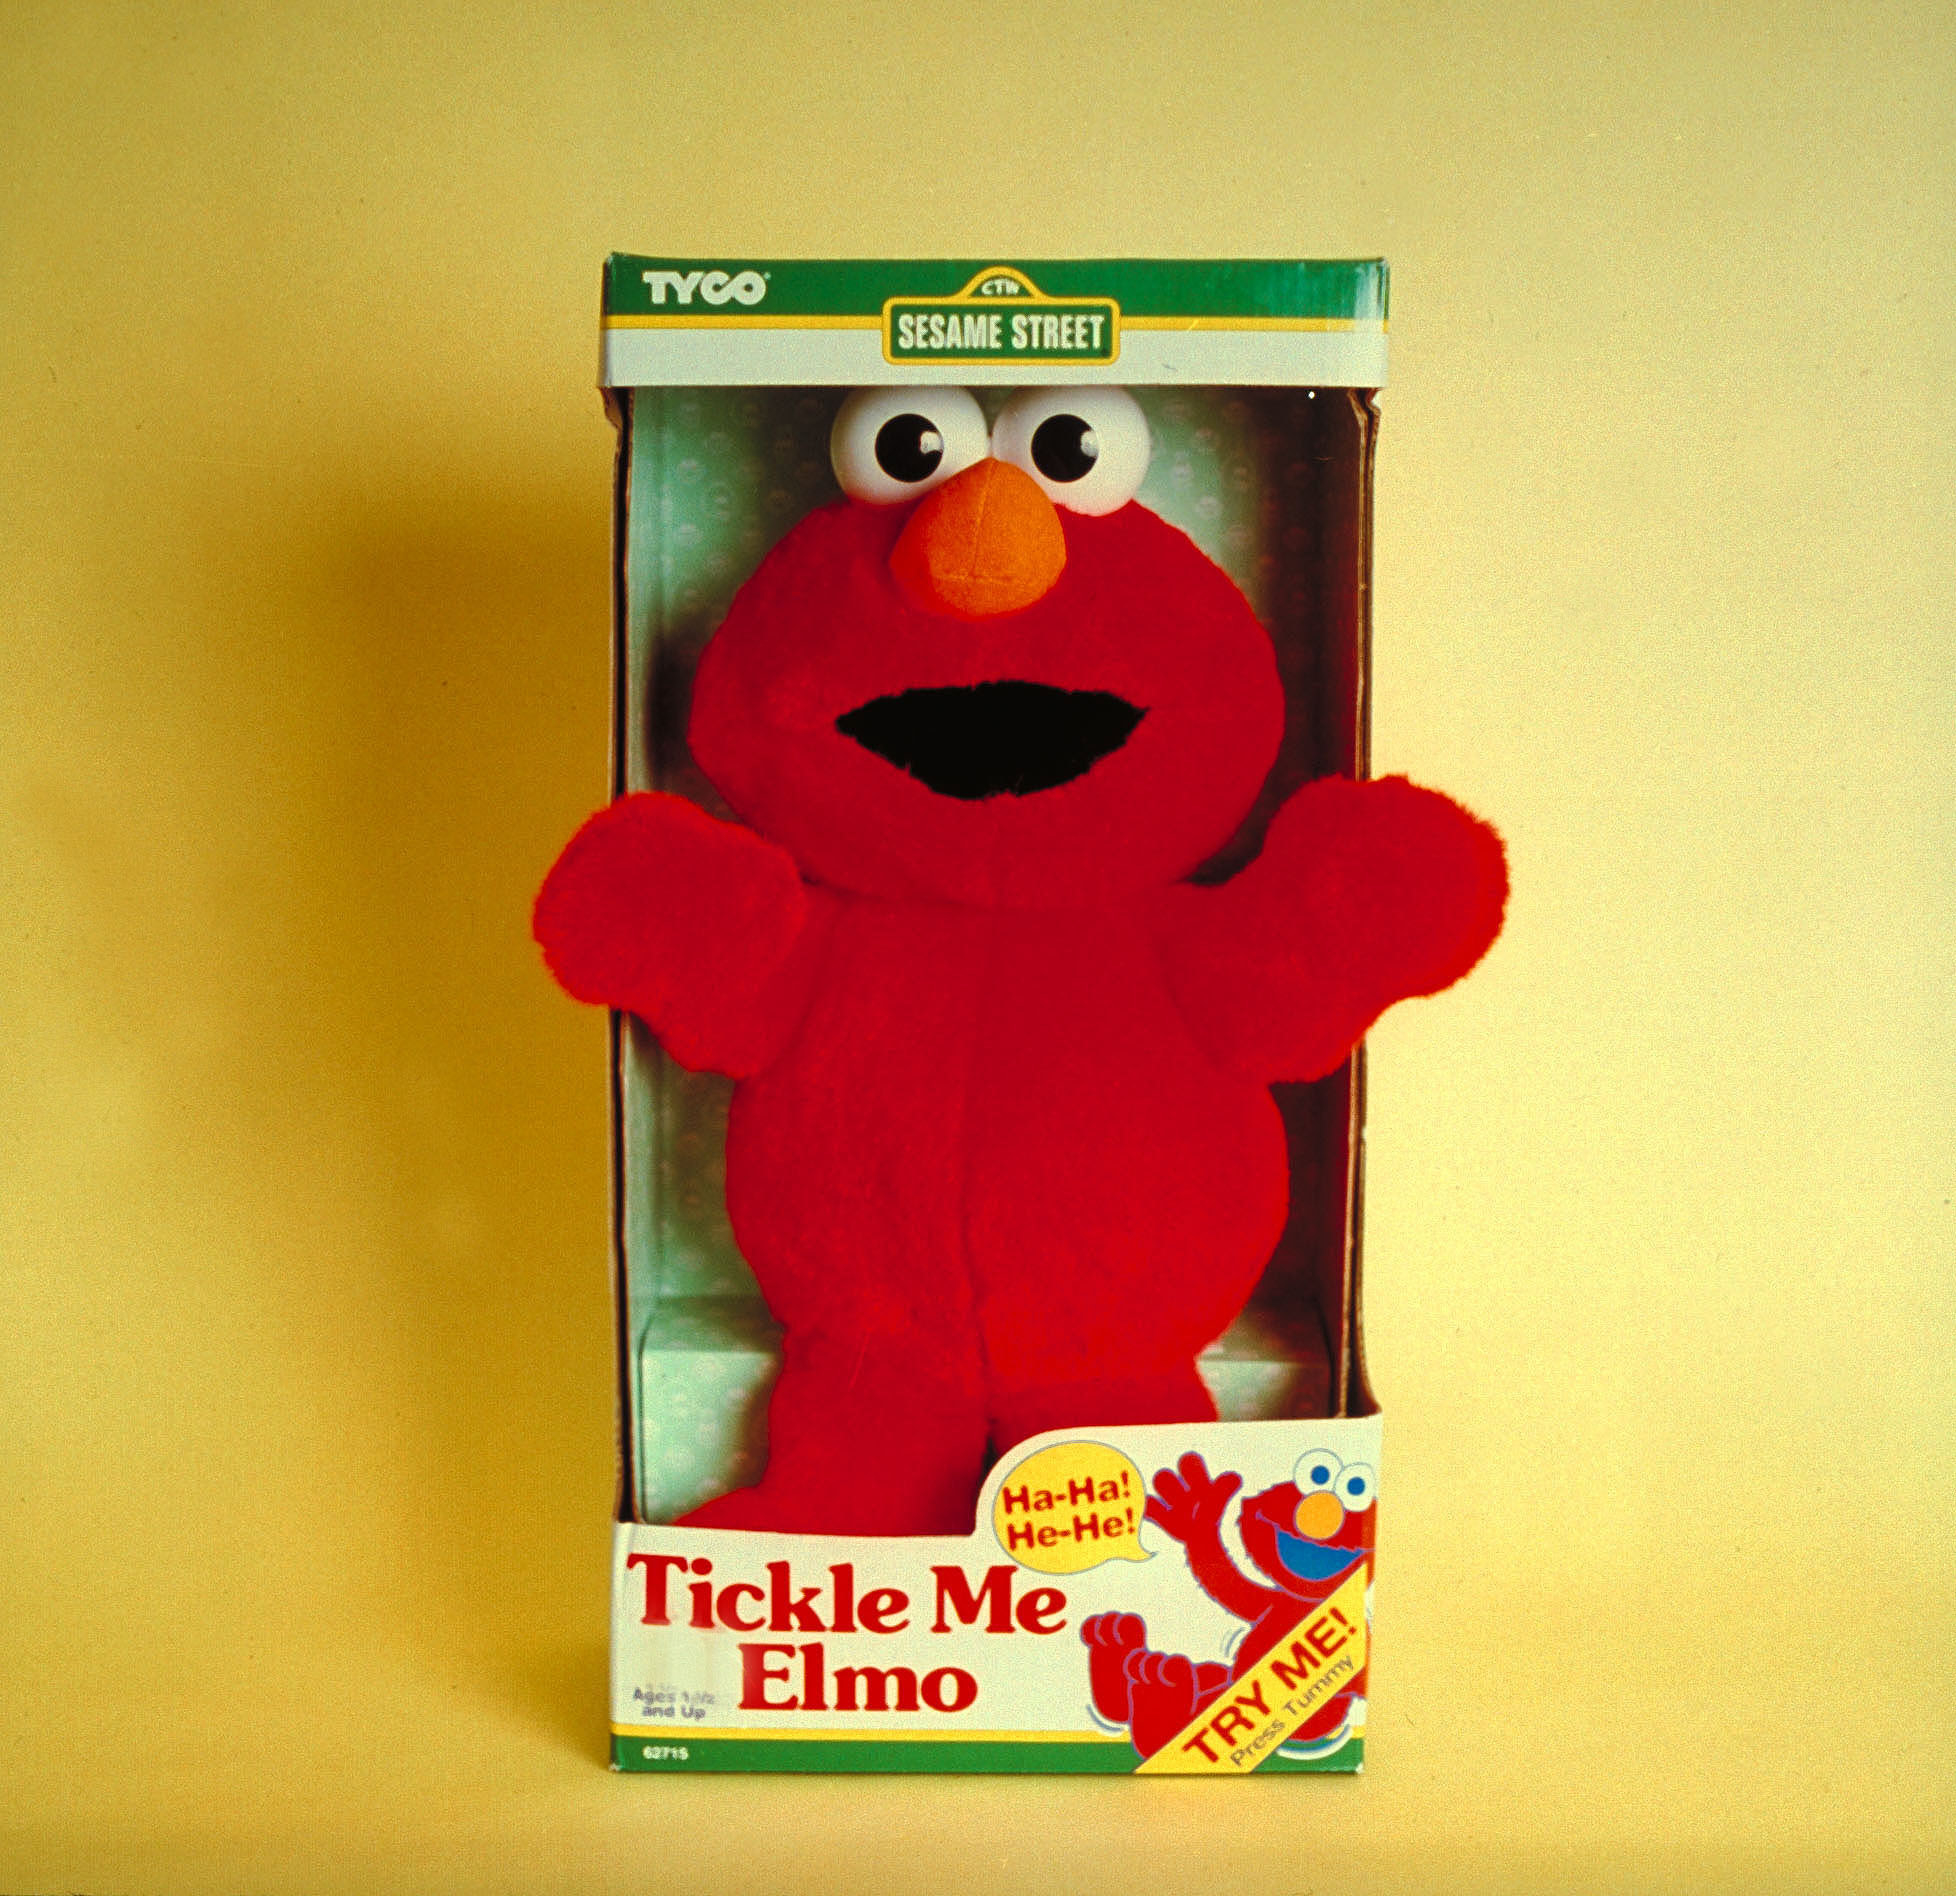 Tickle Me Elmo toy